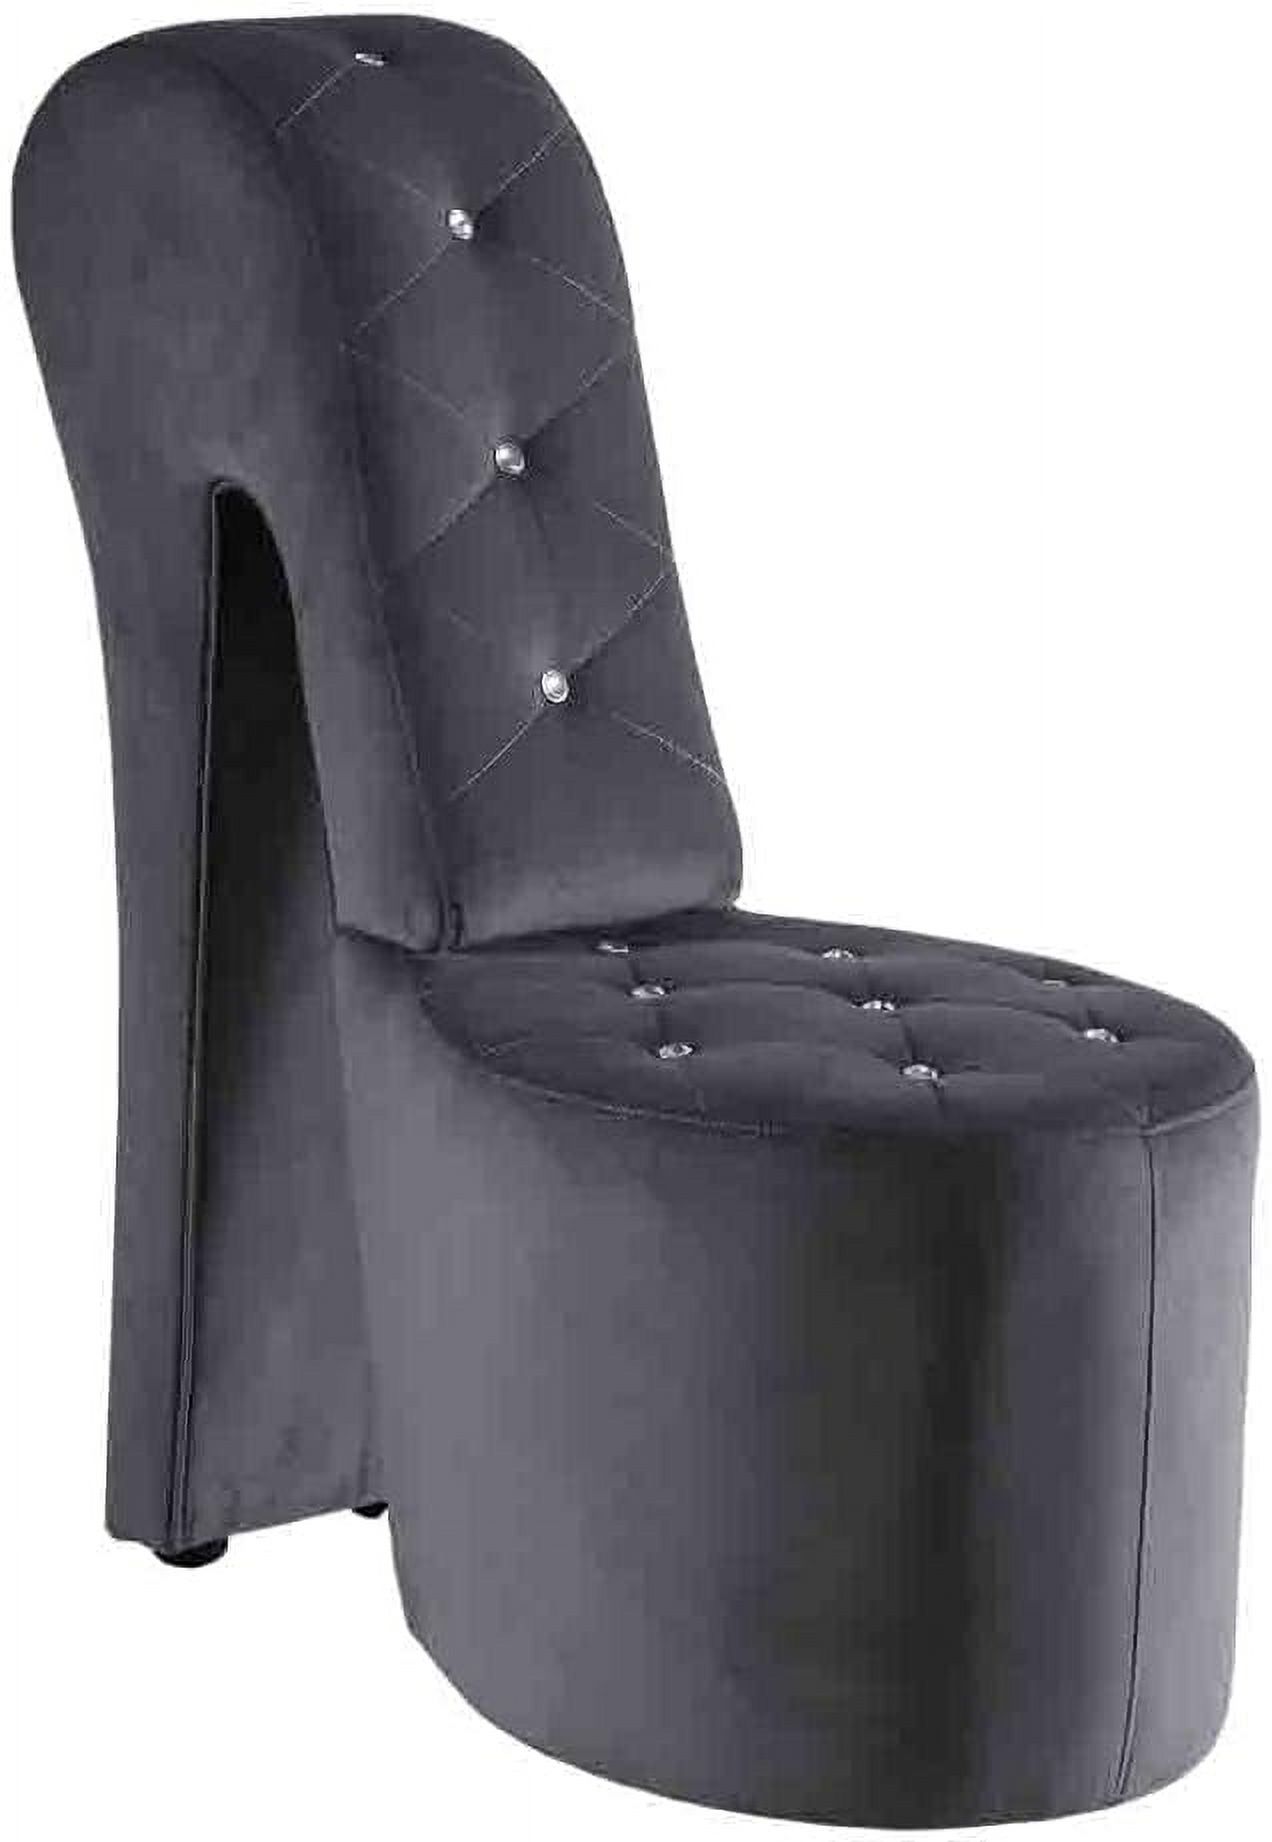 High Heel Velvet Shoe Chair With Crystal Studs, Grey - Walmart.com